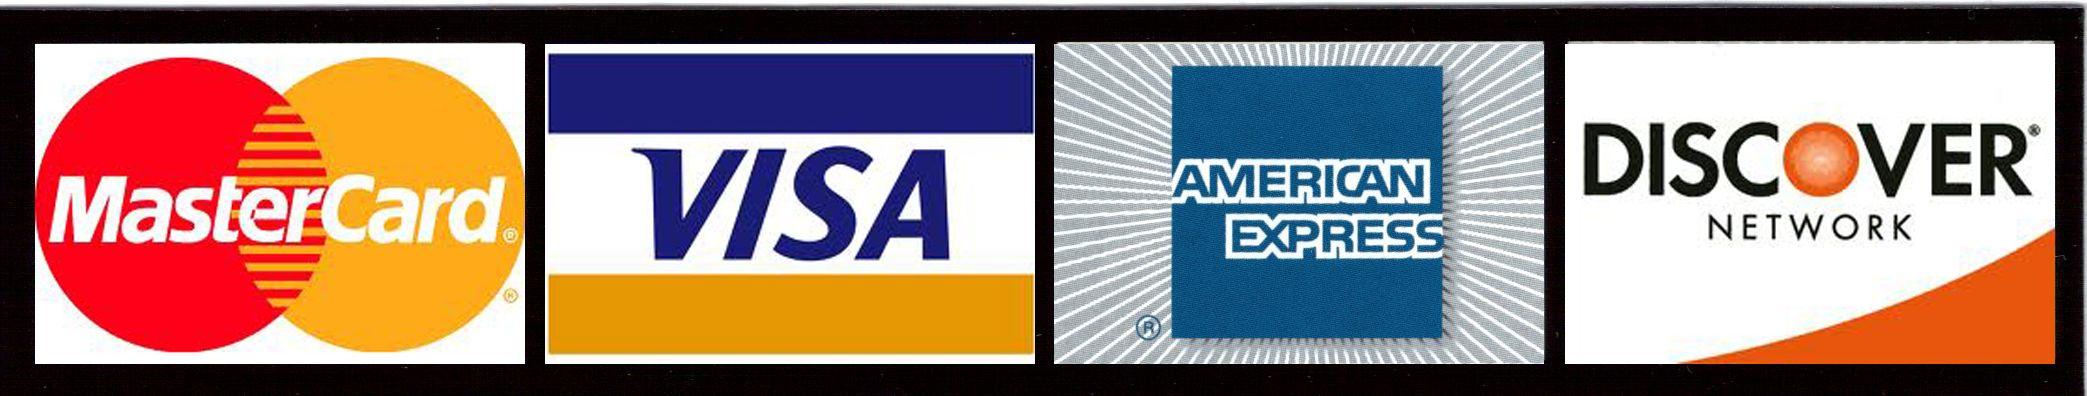 American Express Visa MasterCard Logo - Visa mastercard discover Logos